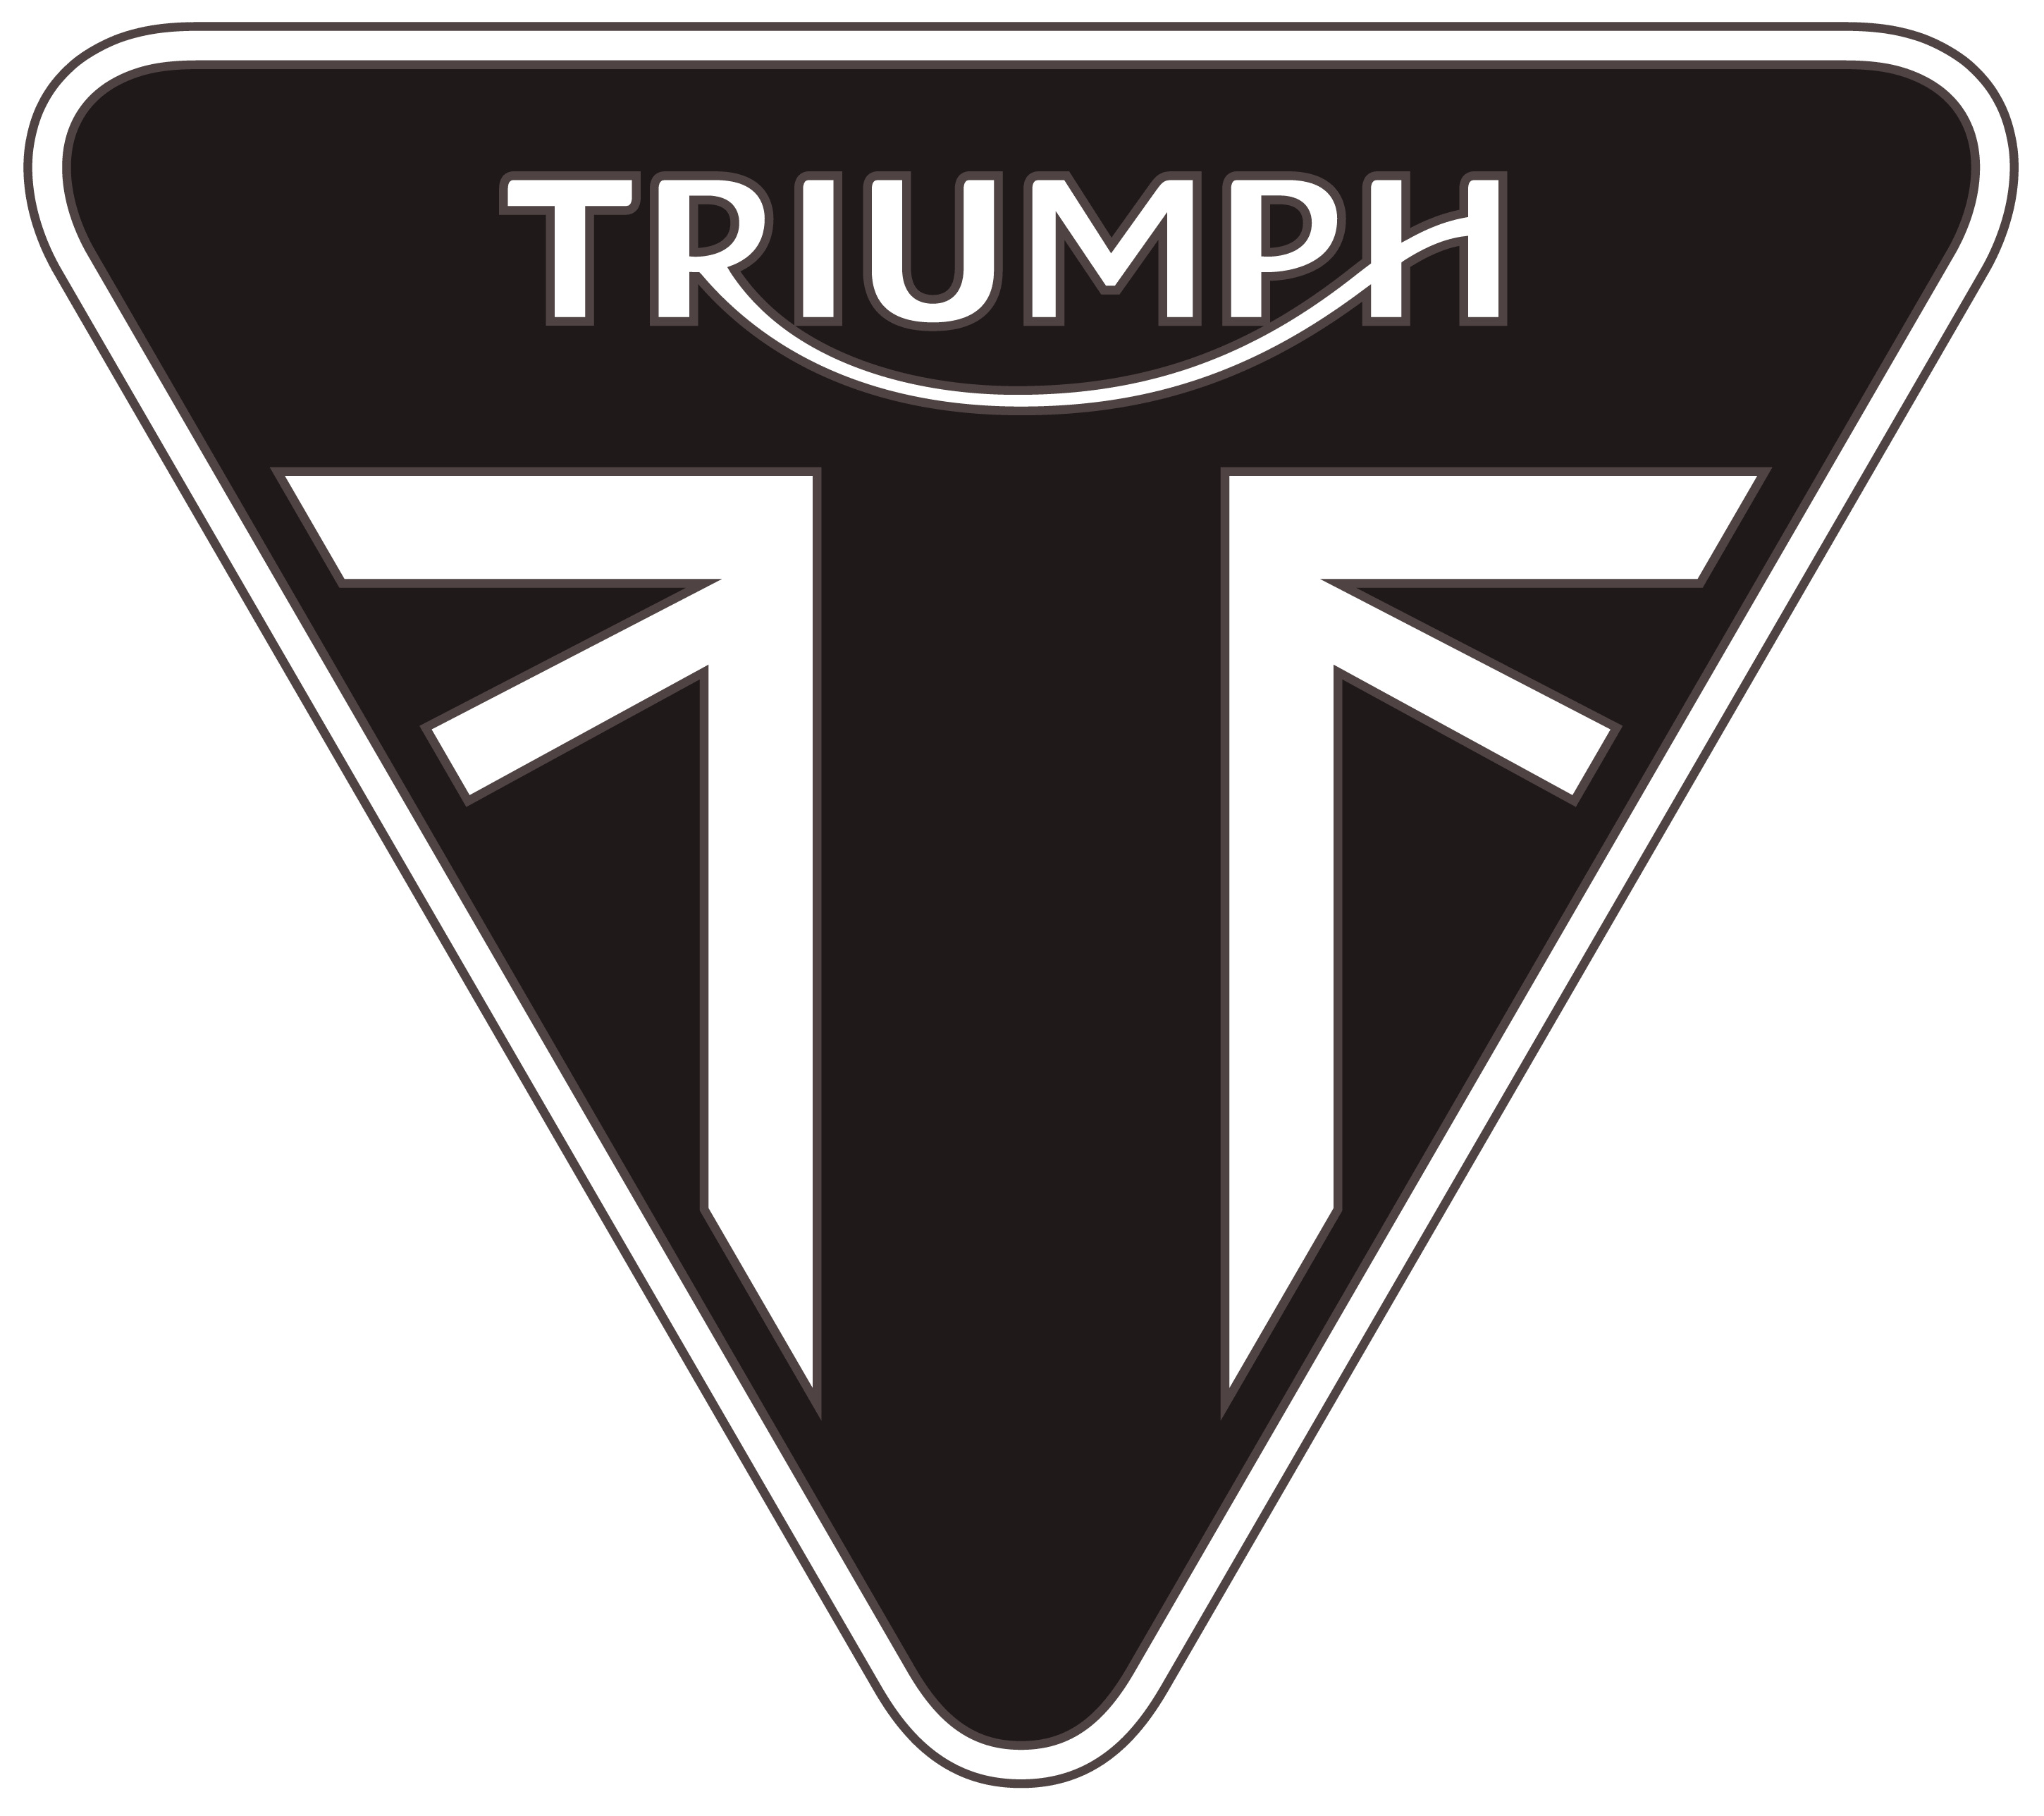 Triumph Logos